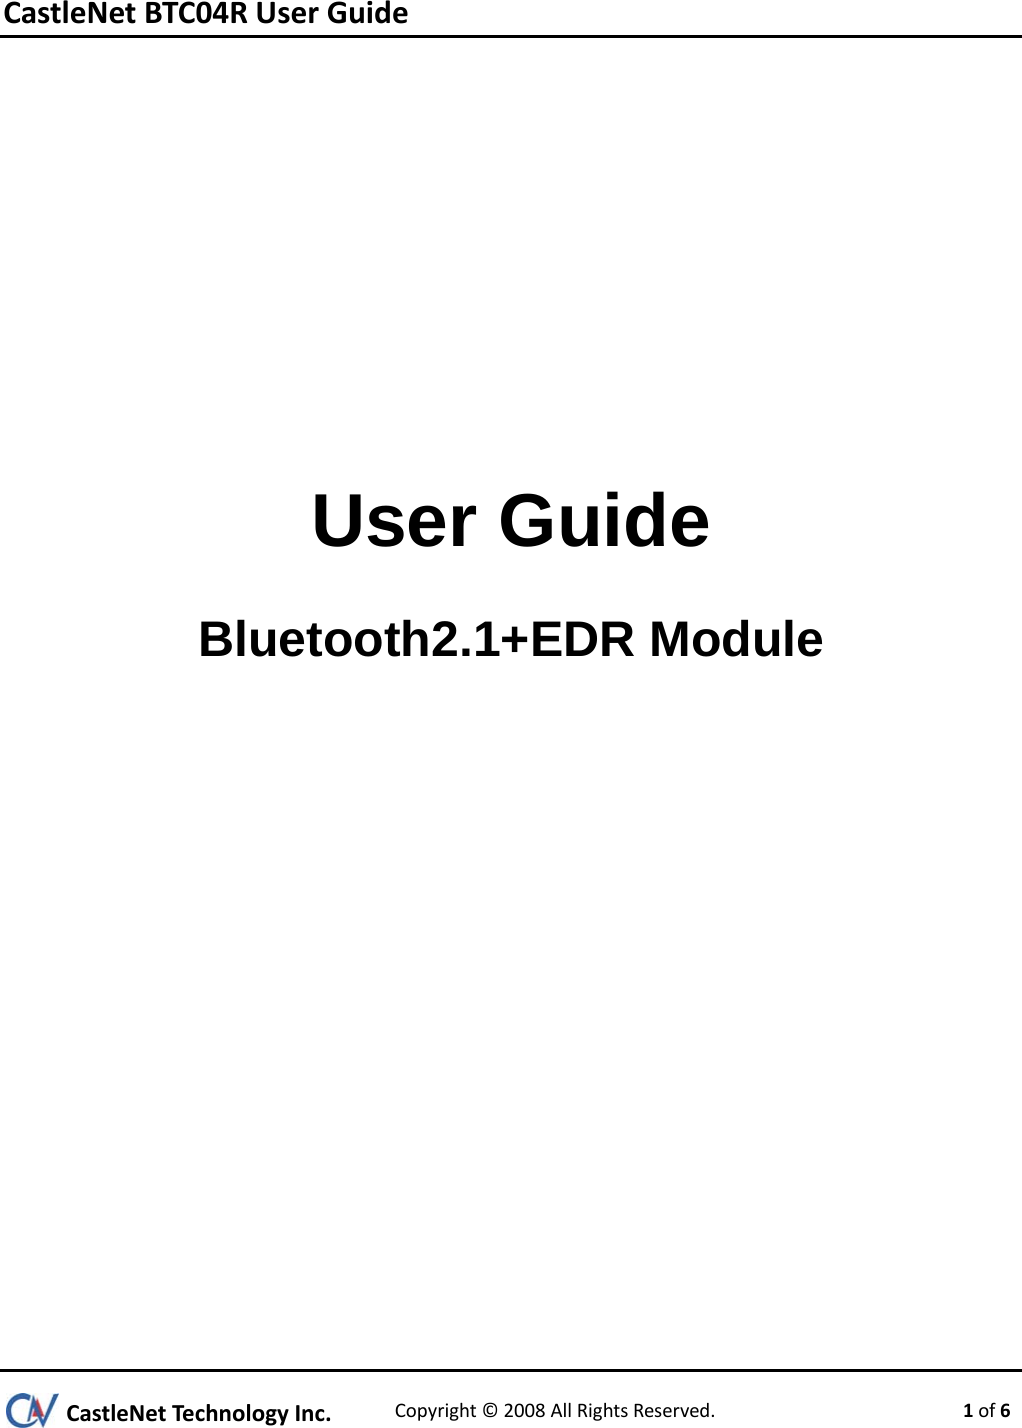 CastleNetBTC04RUserGuideCastleNetTechnologyInc.Copyright©2008AllRightsReserved. 1of6    User Guide Bluetooth2.1+EDR Module     